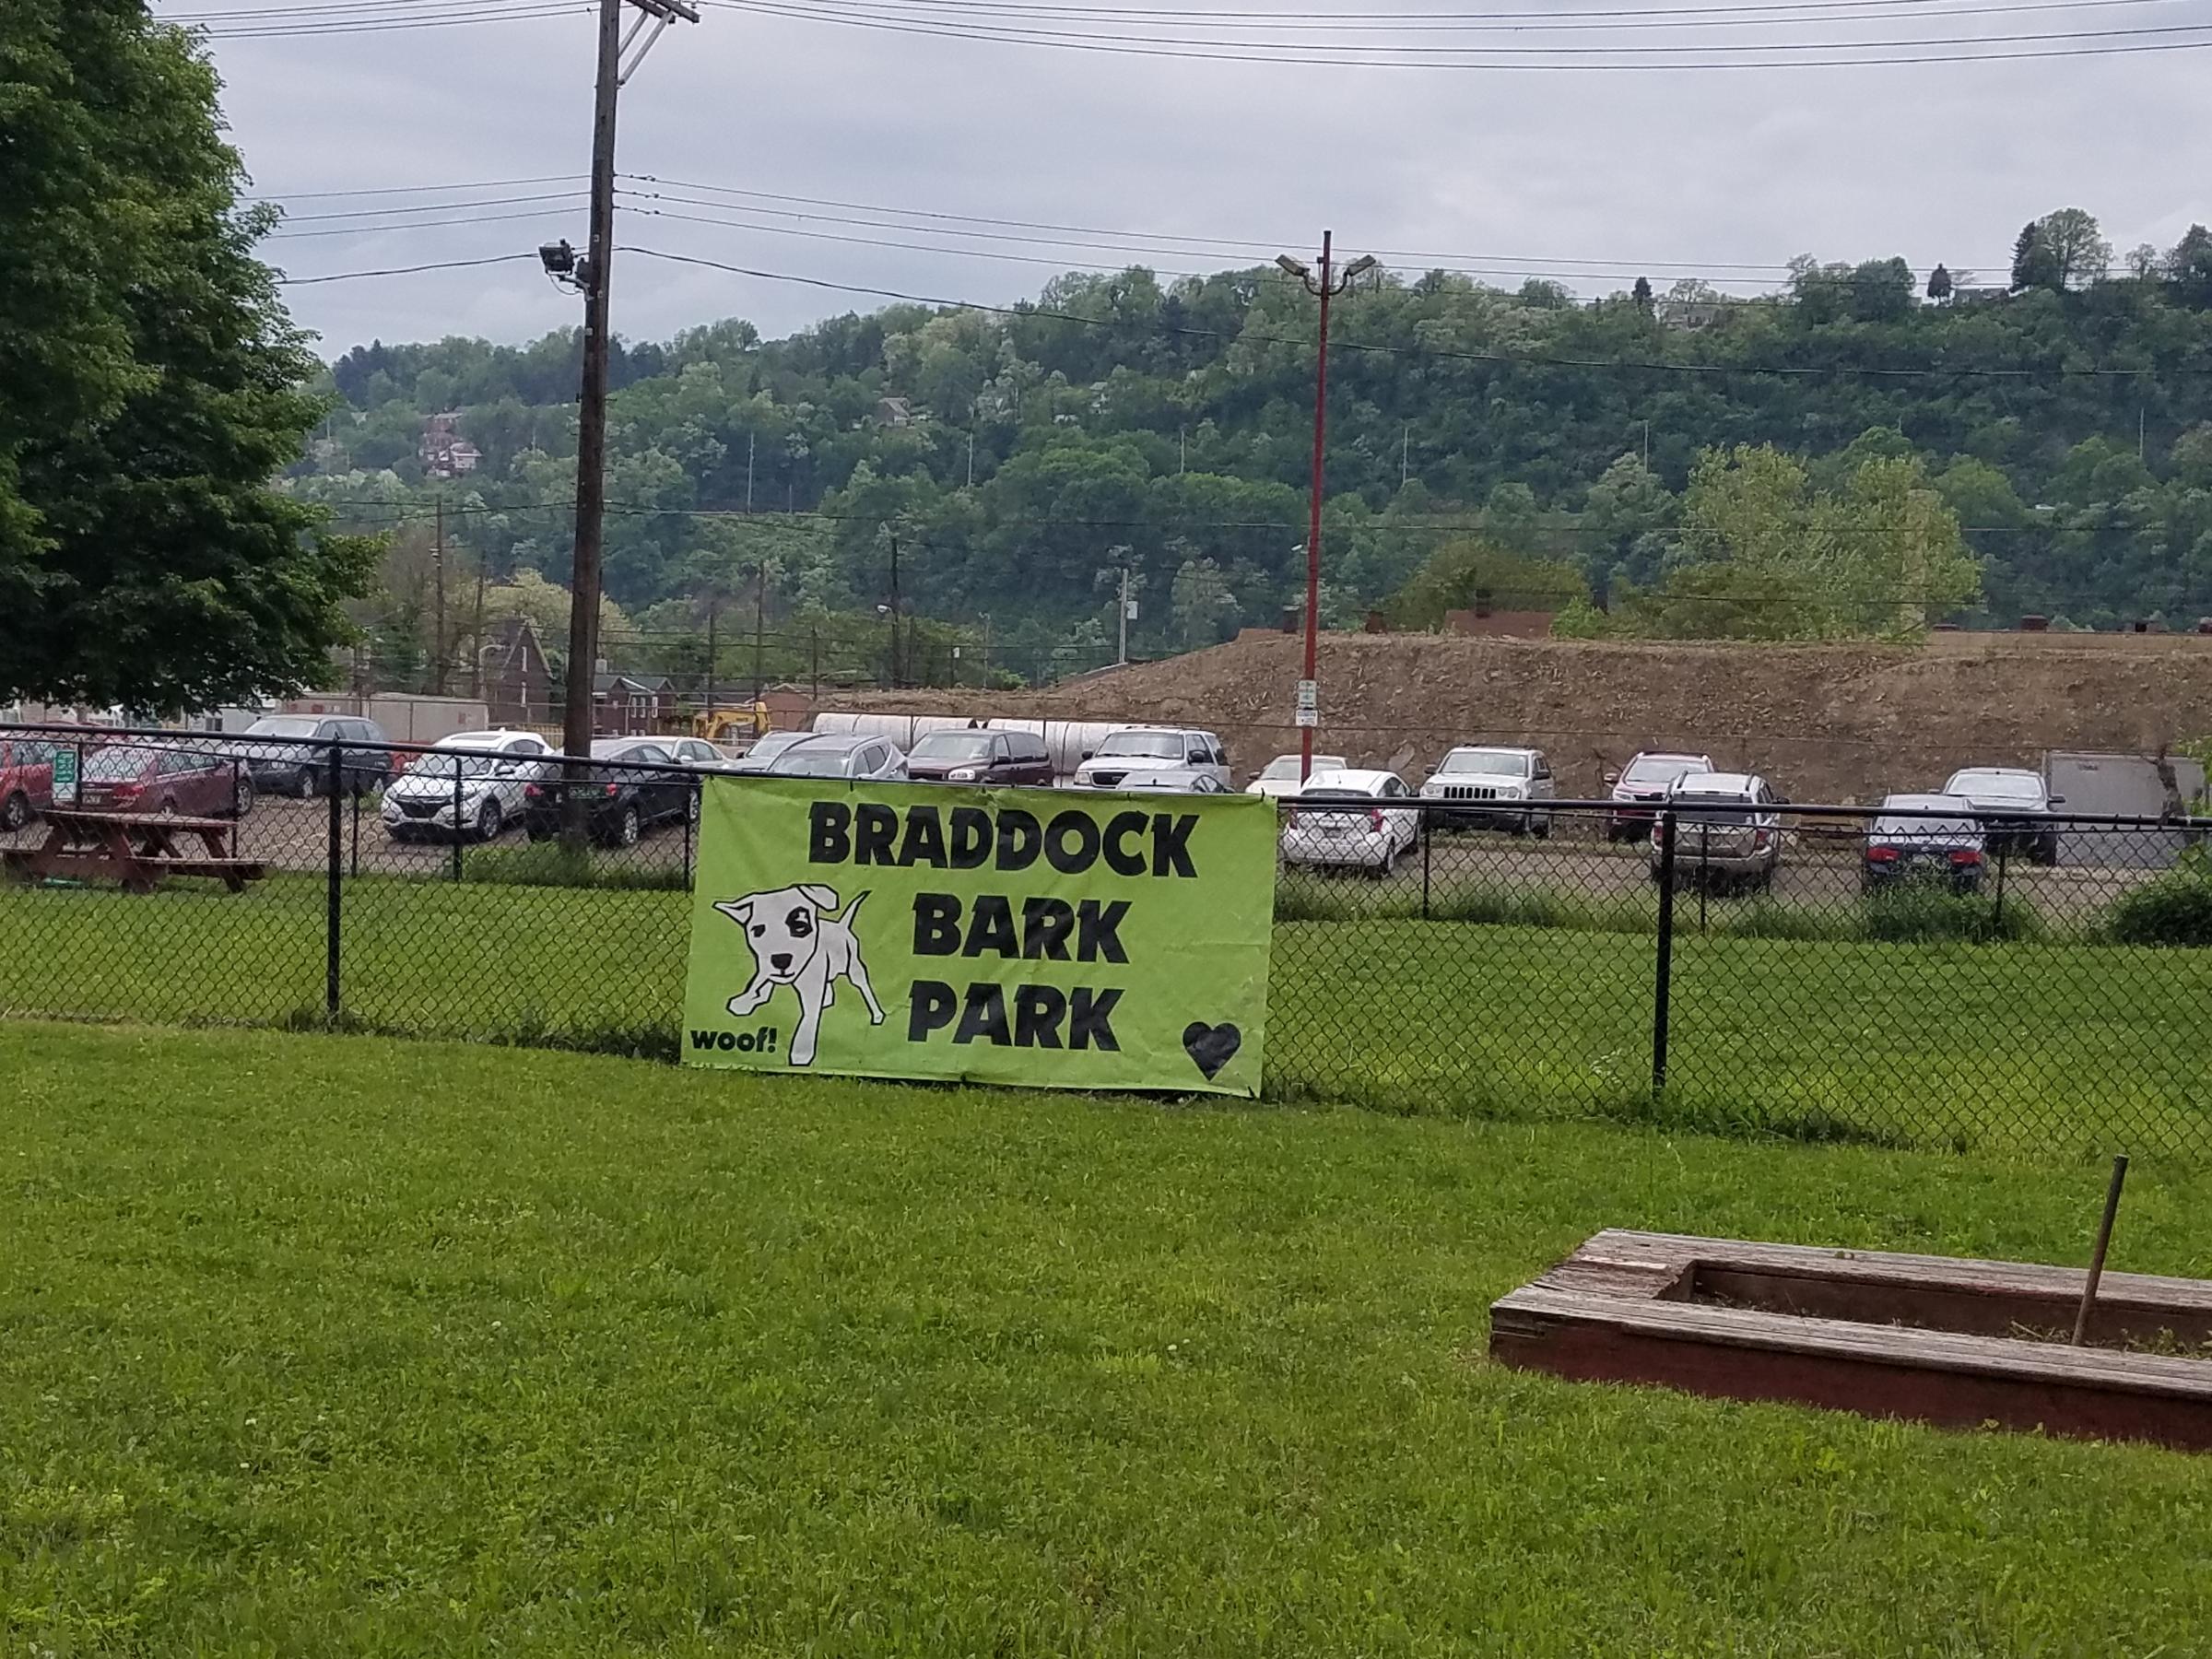 Pet Friendly Braddock Bark Park